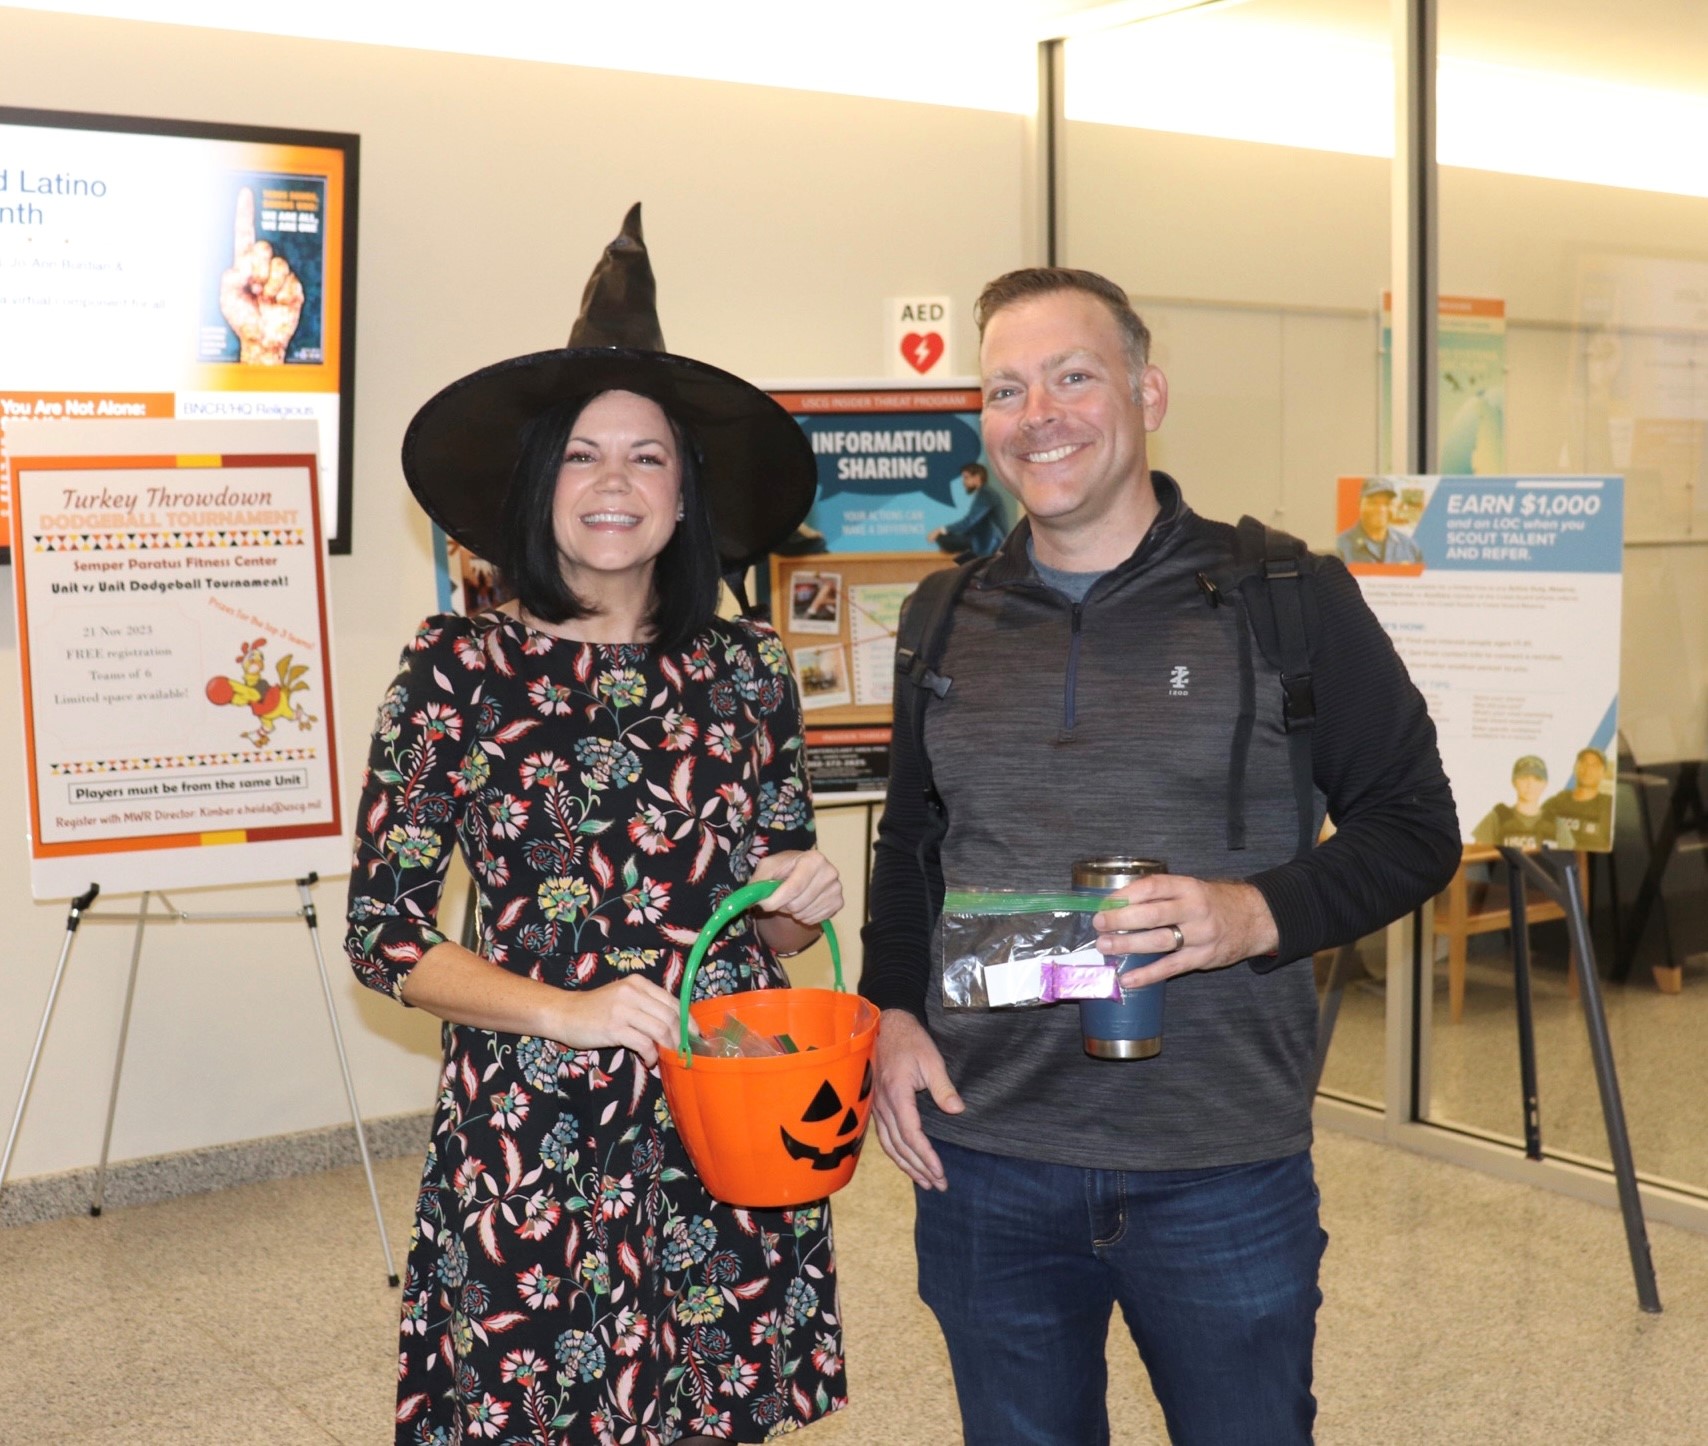 DHS Leader Development Program Manager Alyssa Lombardi handing out Halloween Leader Grams.